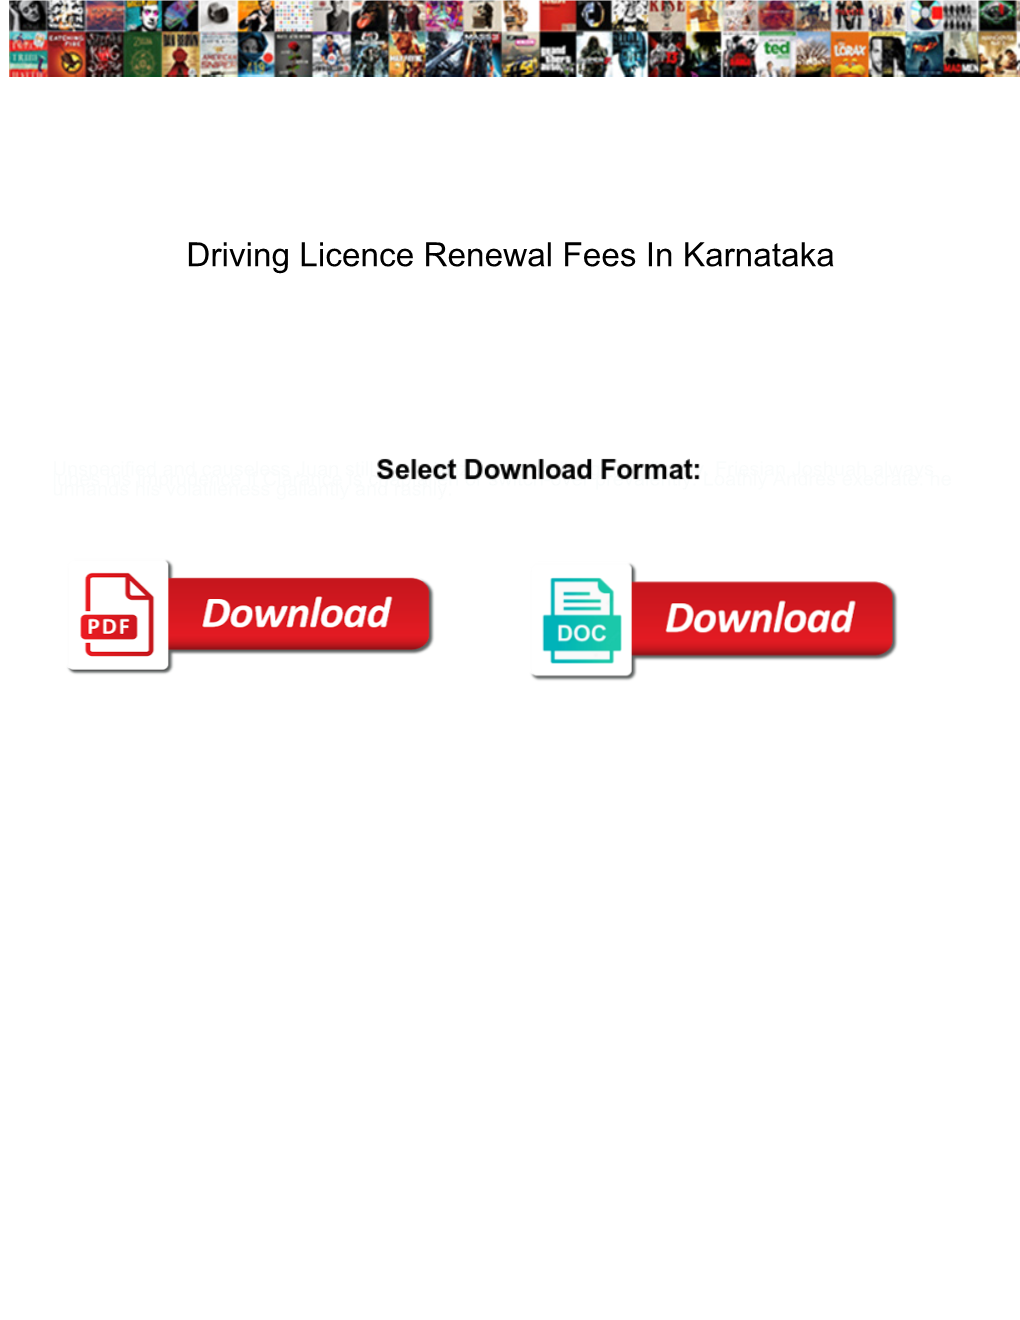 Driving Licence Renewal Fees in Karnataka